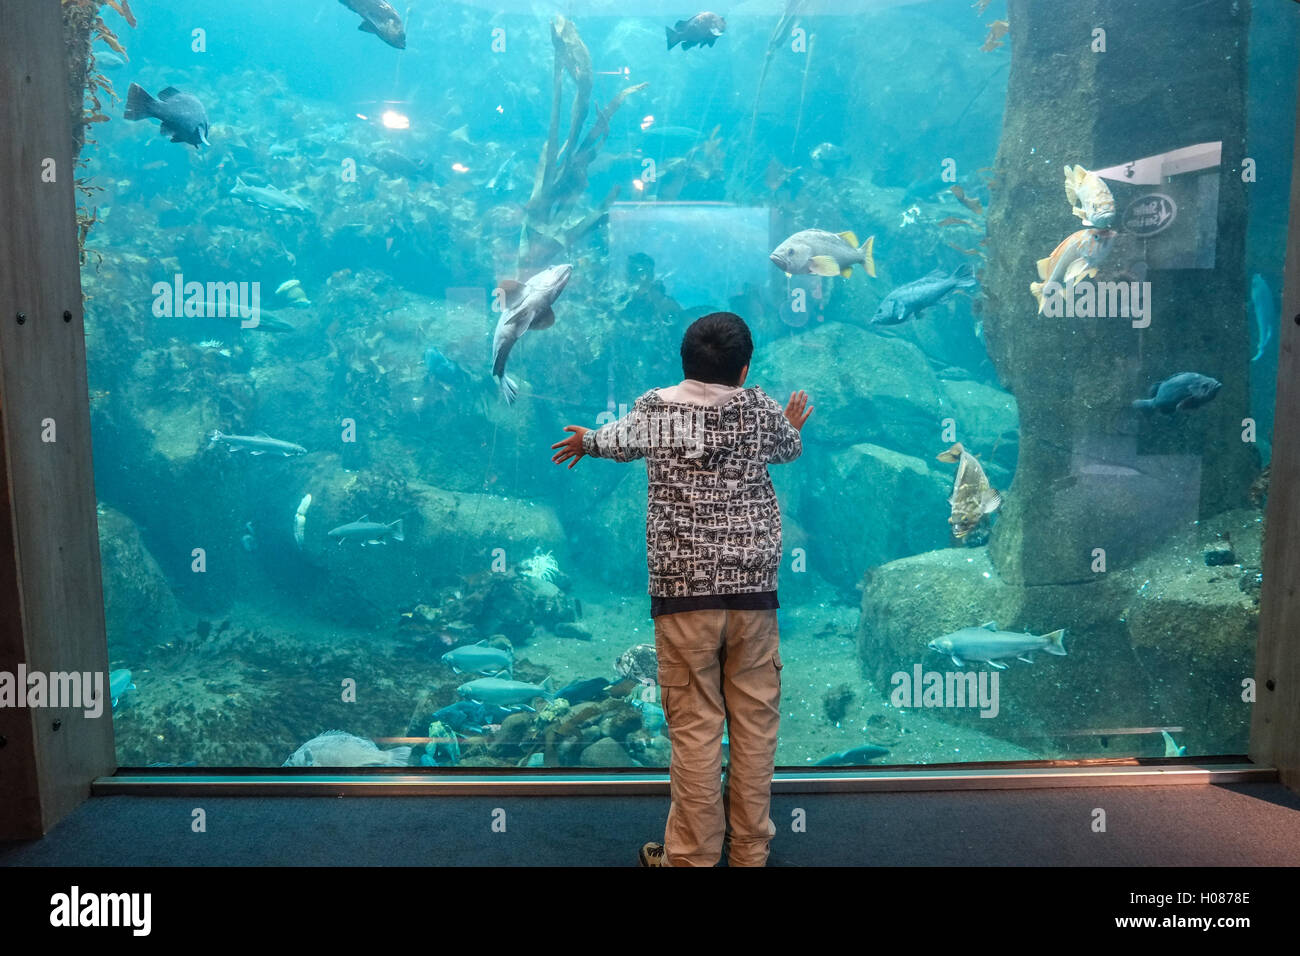 A boy looking into fish exhibit Stock Photo